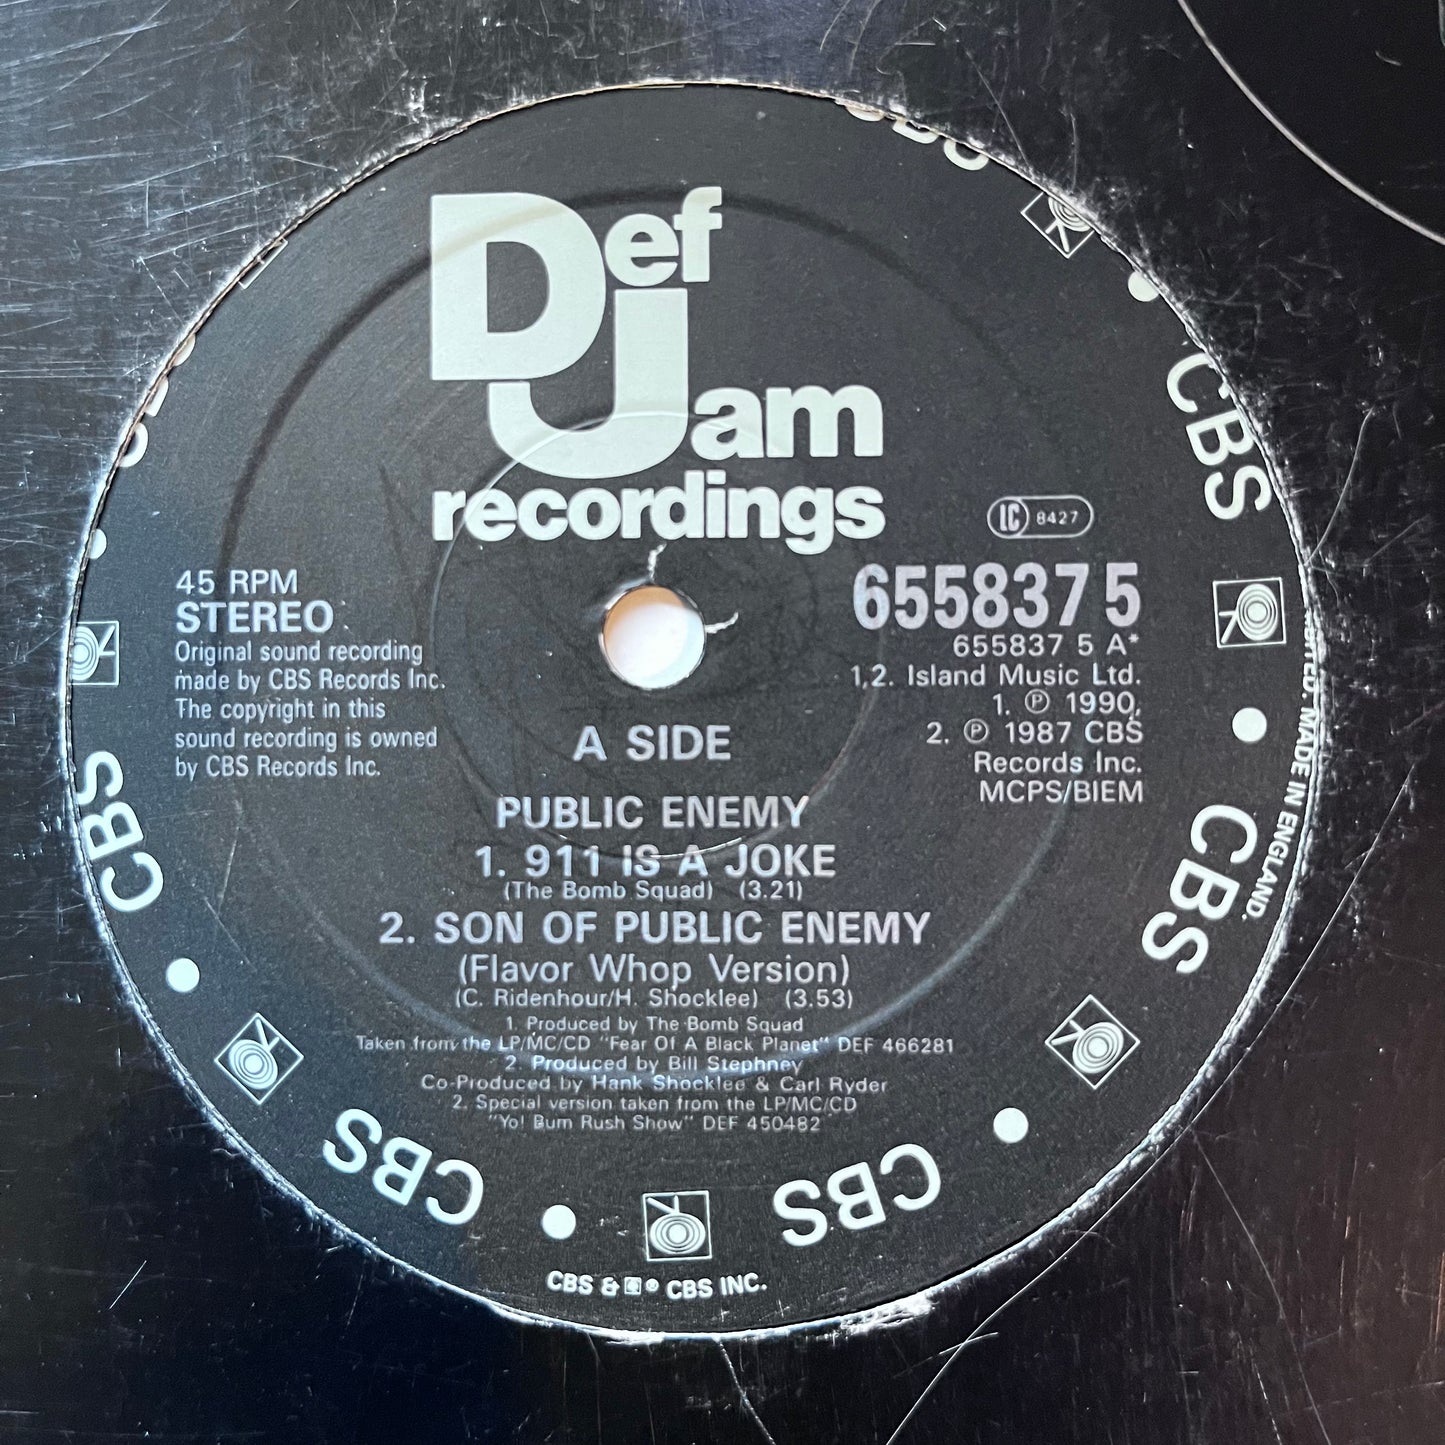 Public Enemy “911 Is A Joke” Limited Edition 4 Track 12inch Vinyl Single Sampler